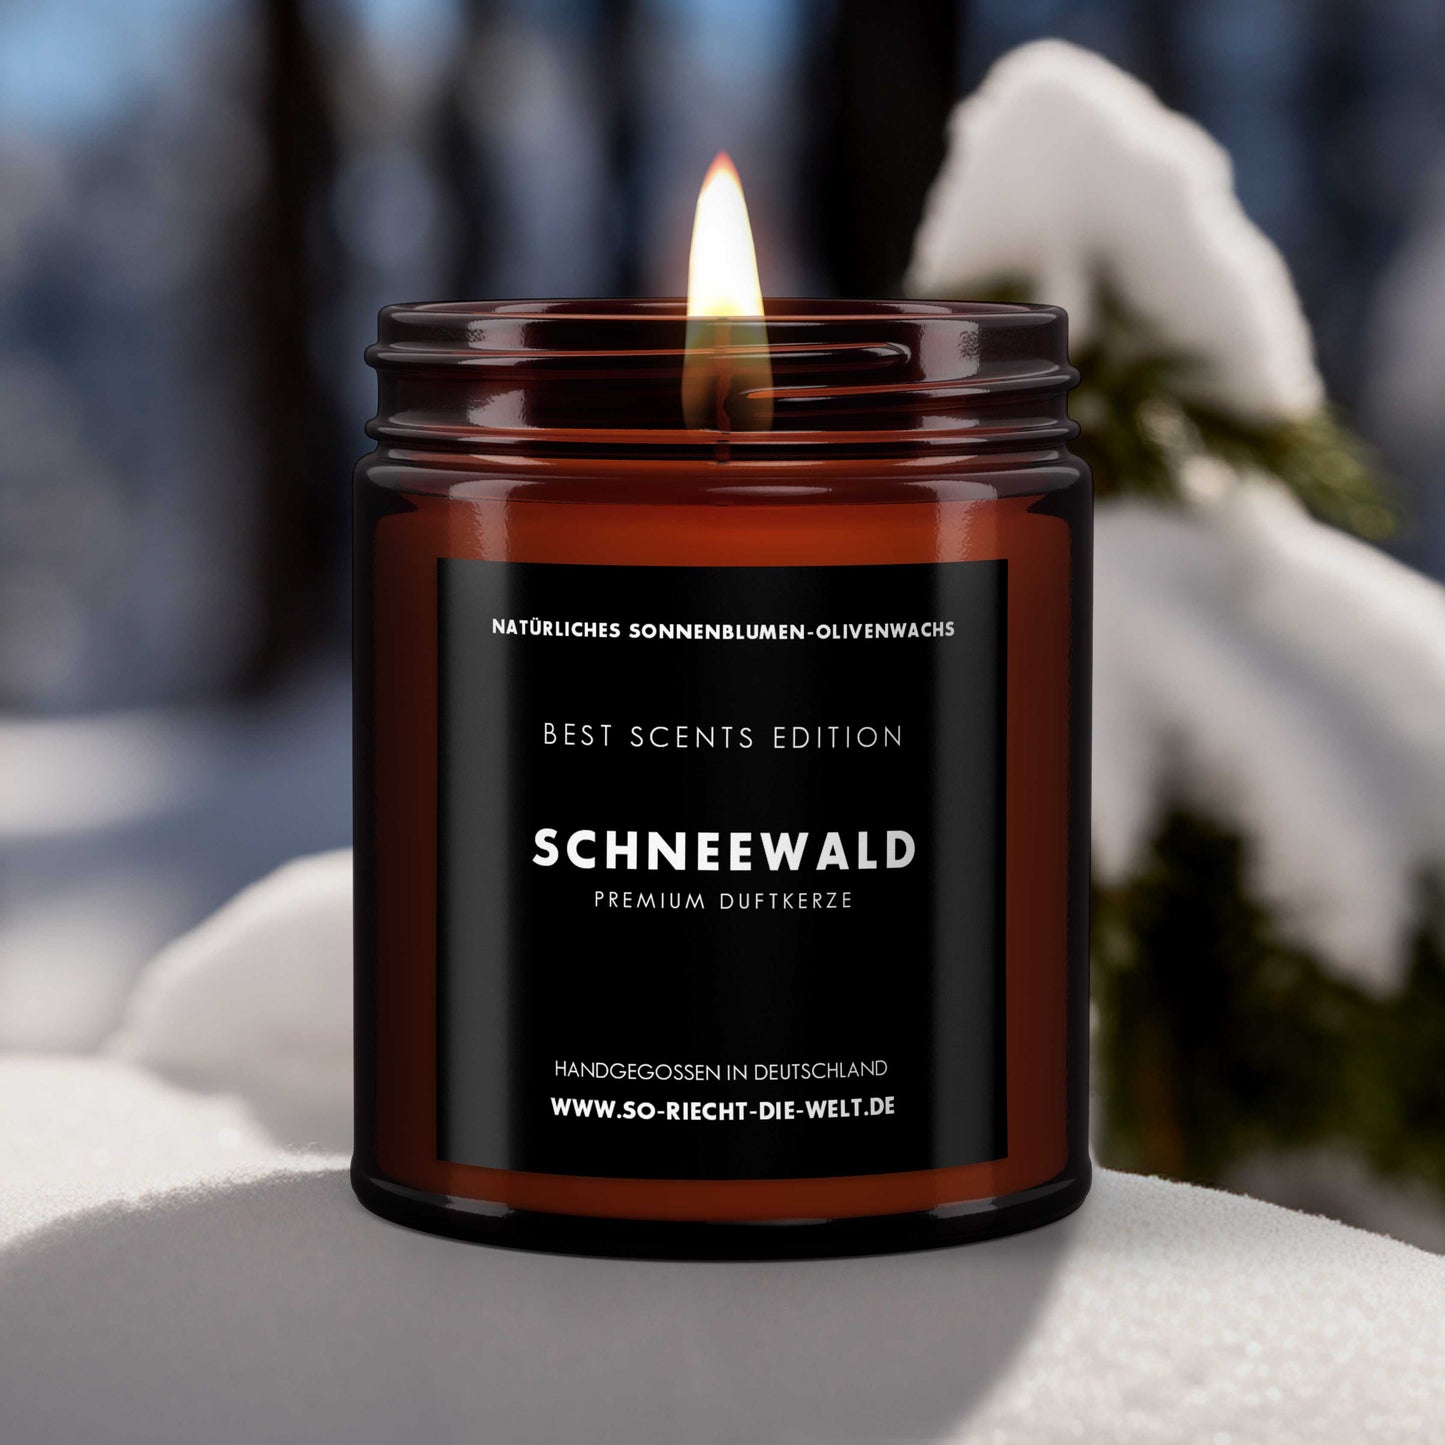 Schneewald Kerze - Best Scents Edition